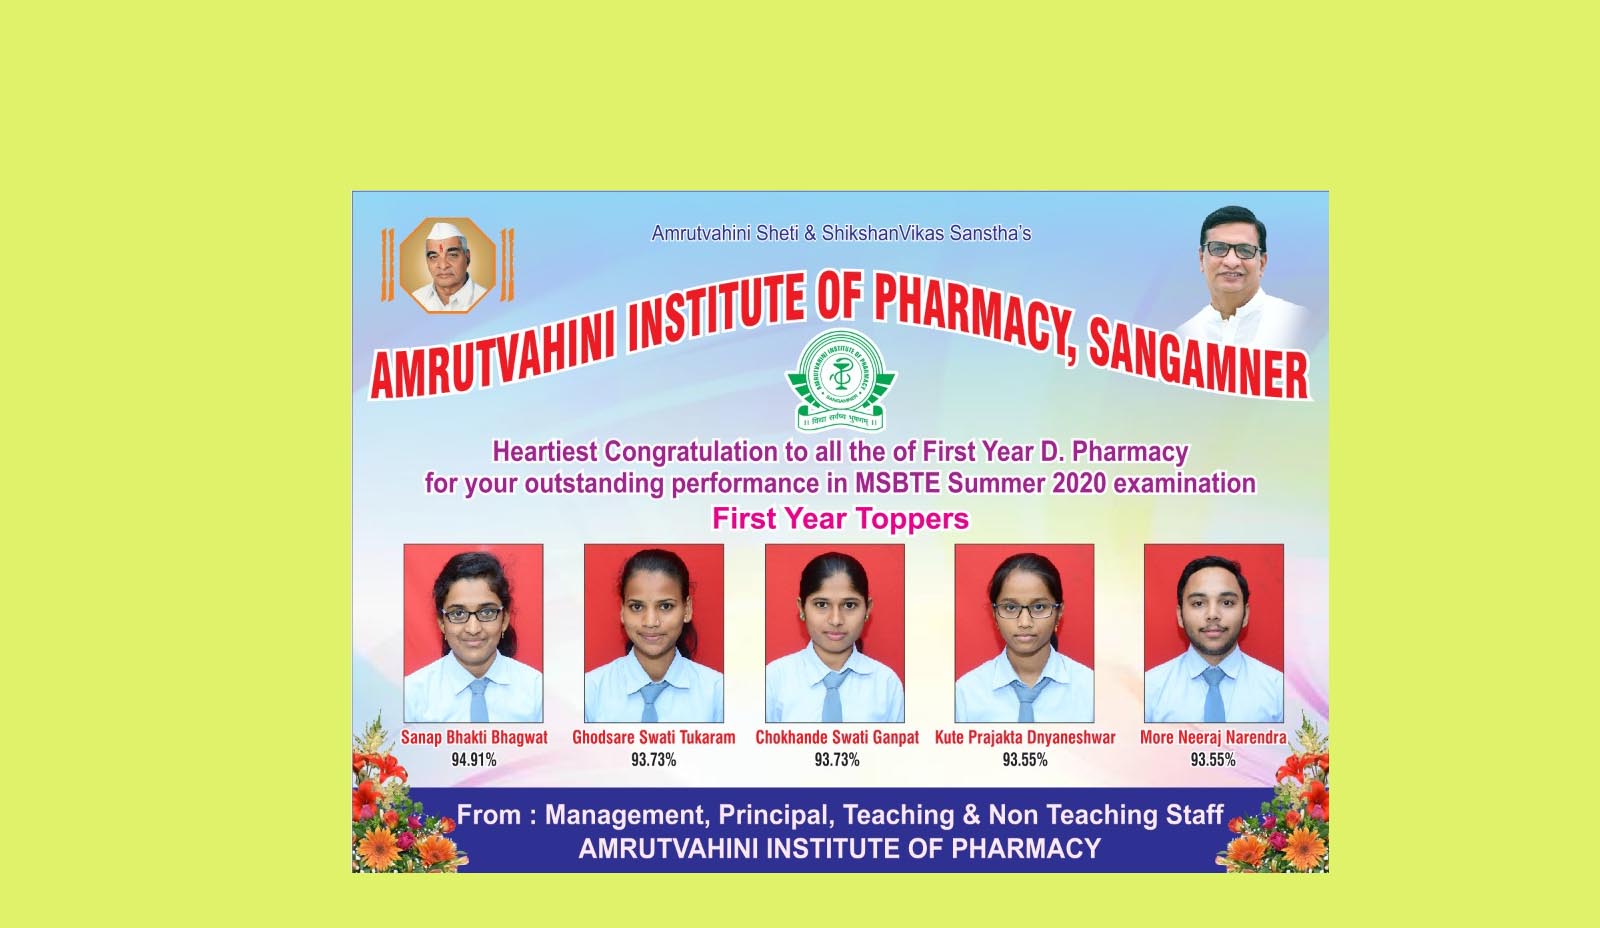 Amrutvahini Institute Of Pharmacy, Sangamner